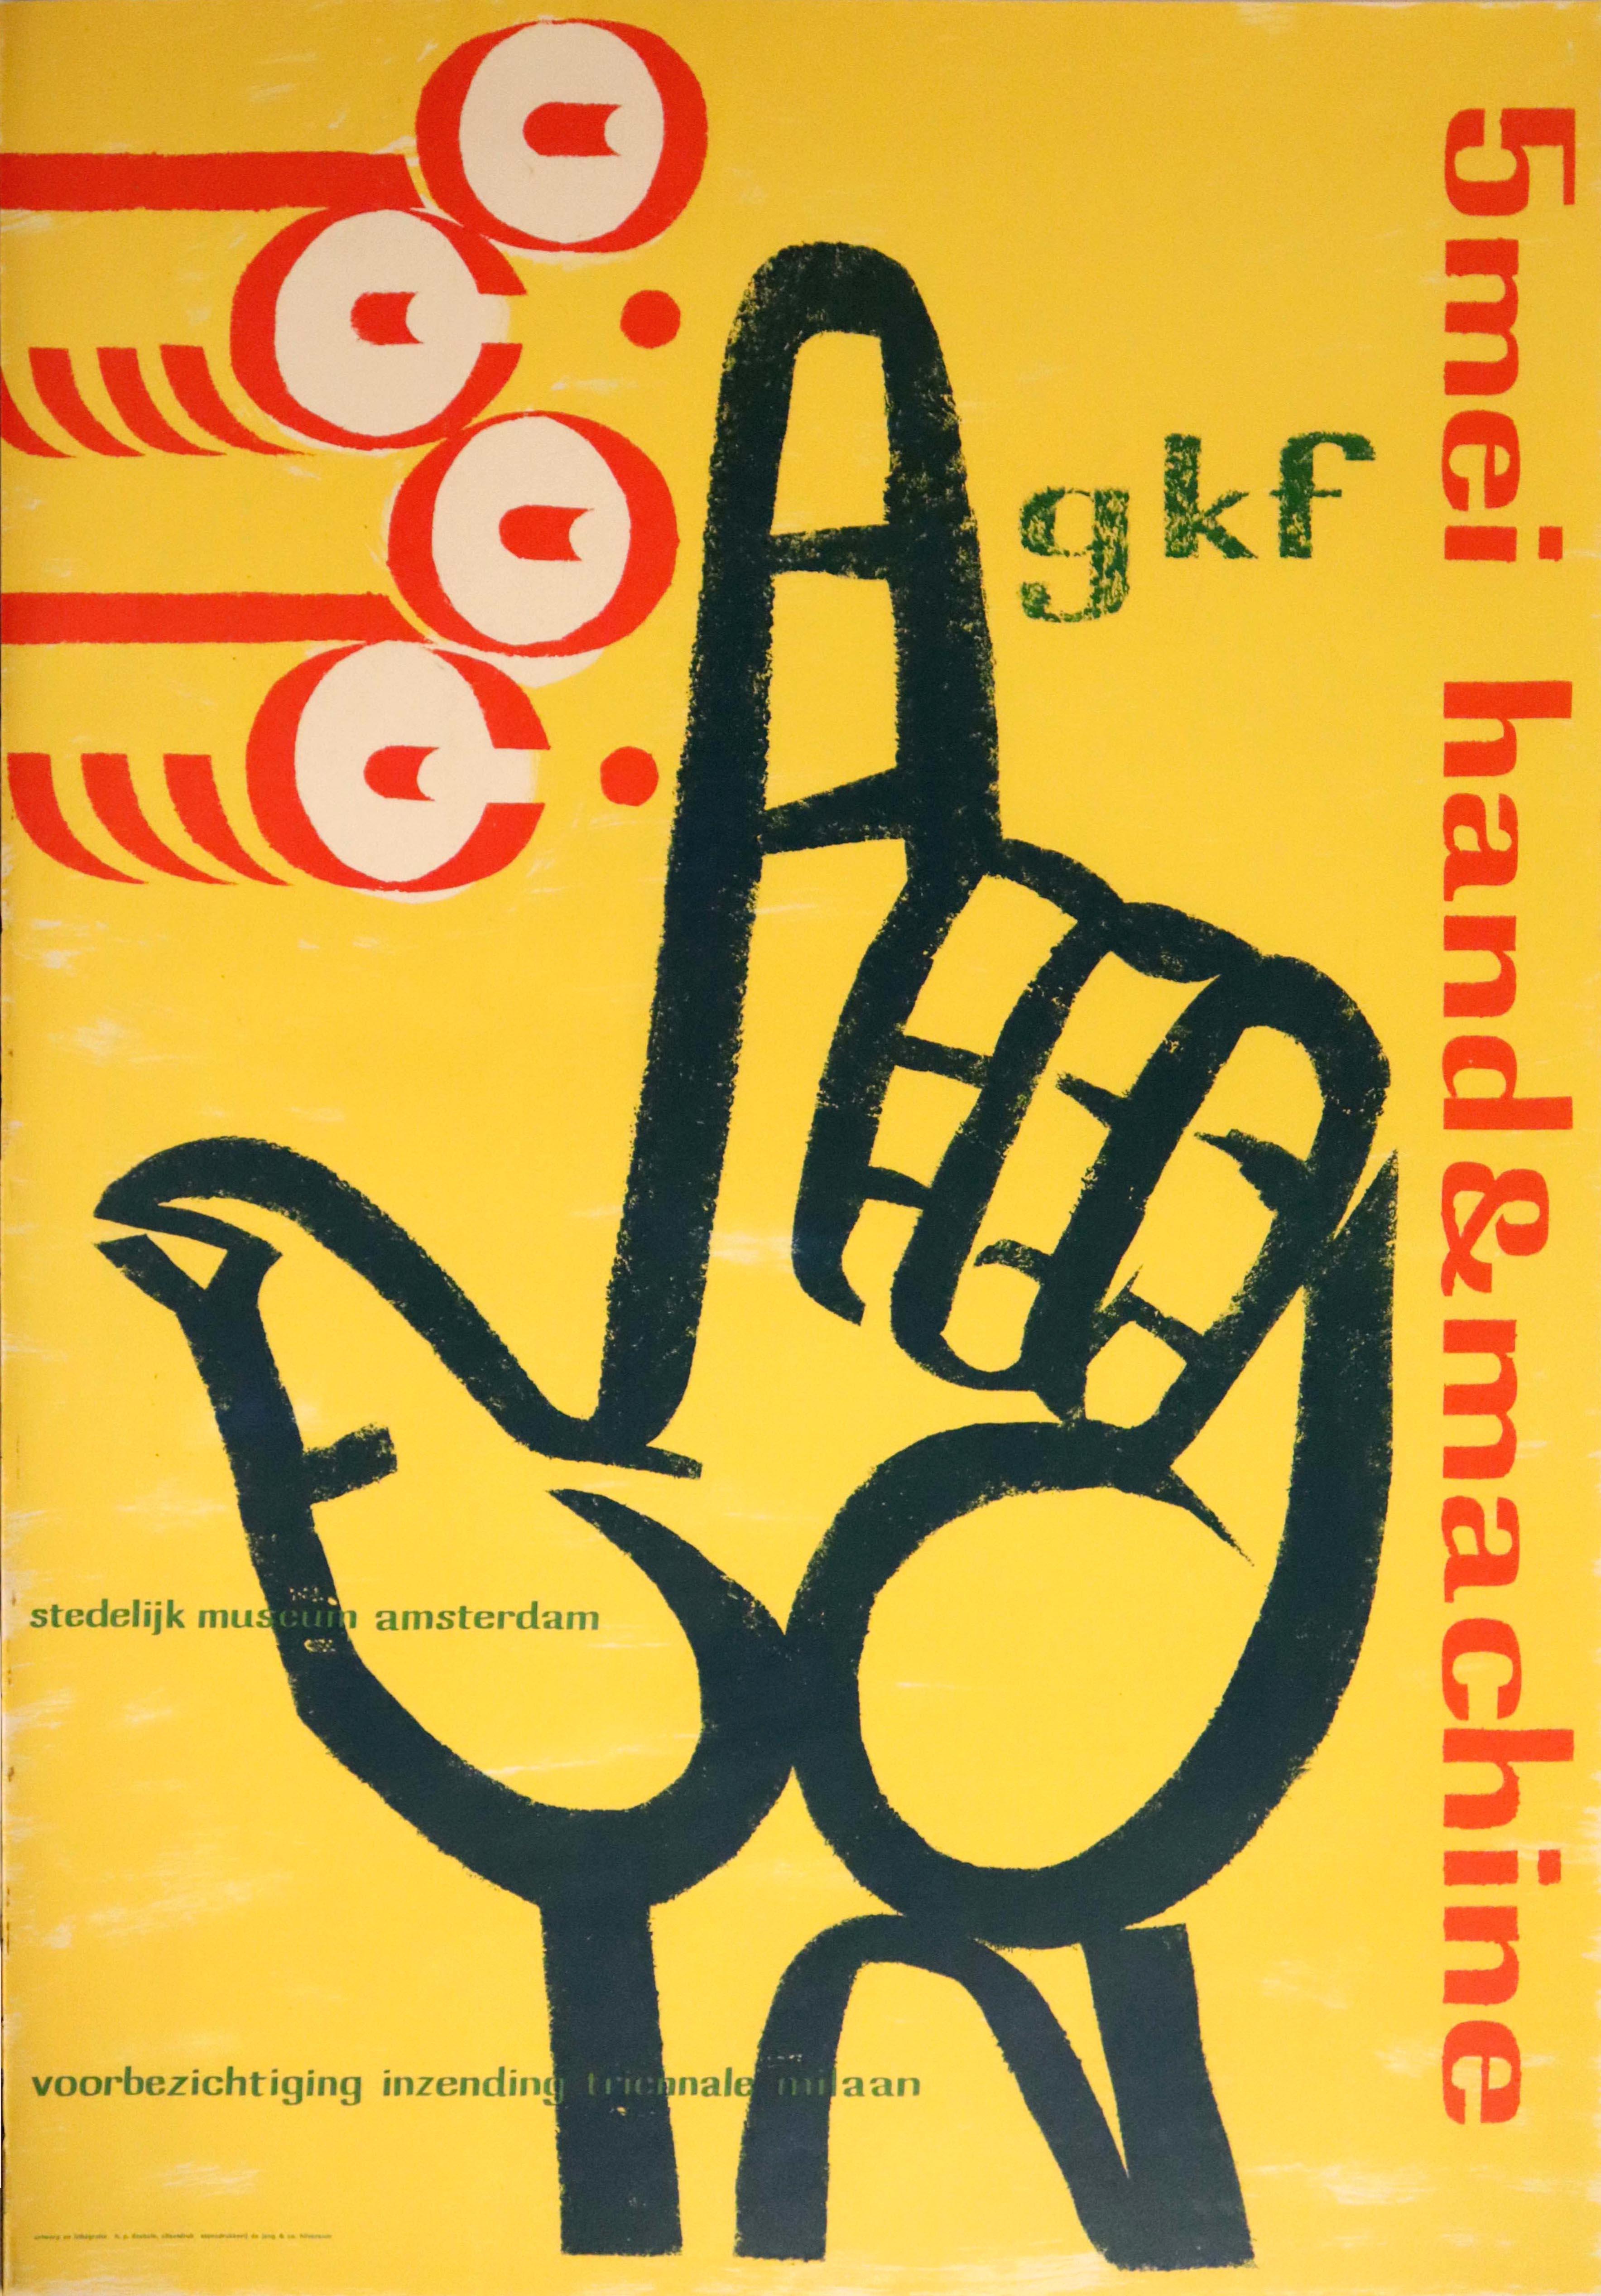 Willem Sandberg Print - Original Vintage Poster For The GKF Exhibition Hand And Machine Stedelijk Museum